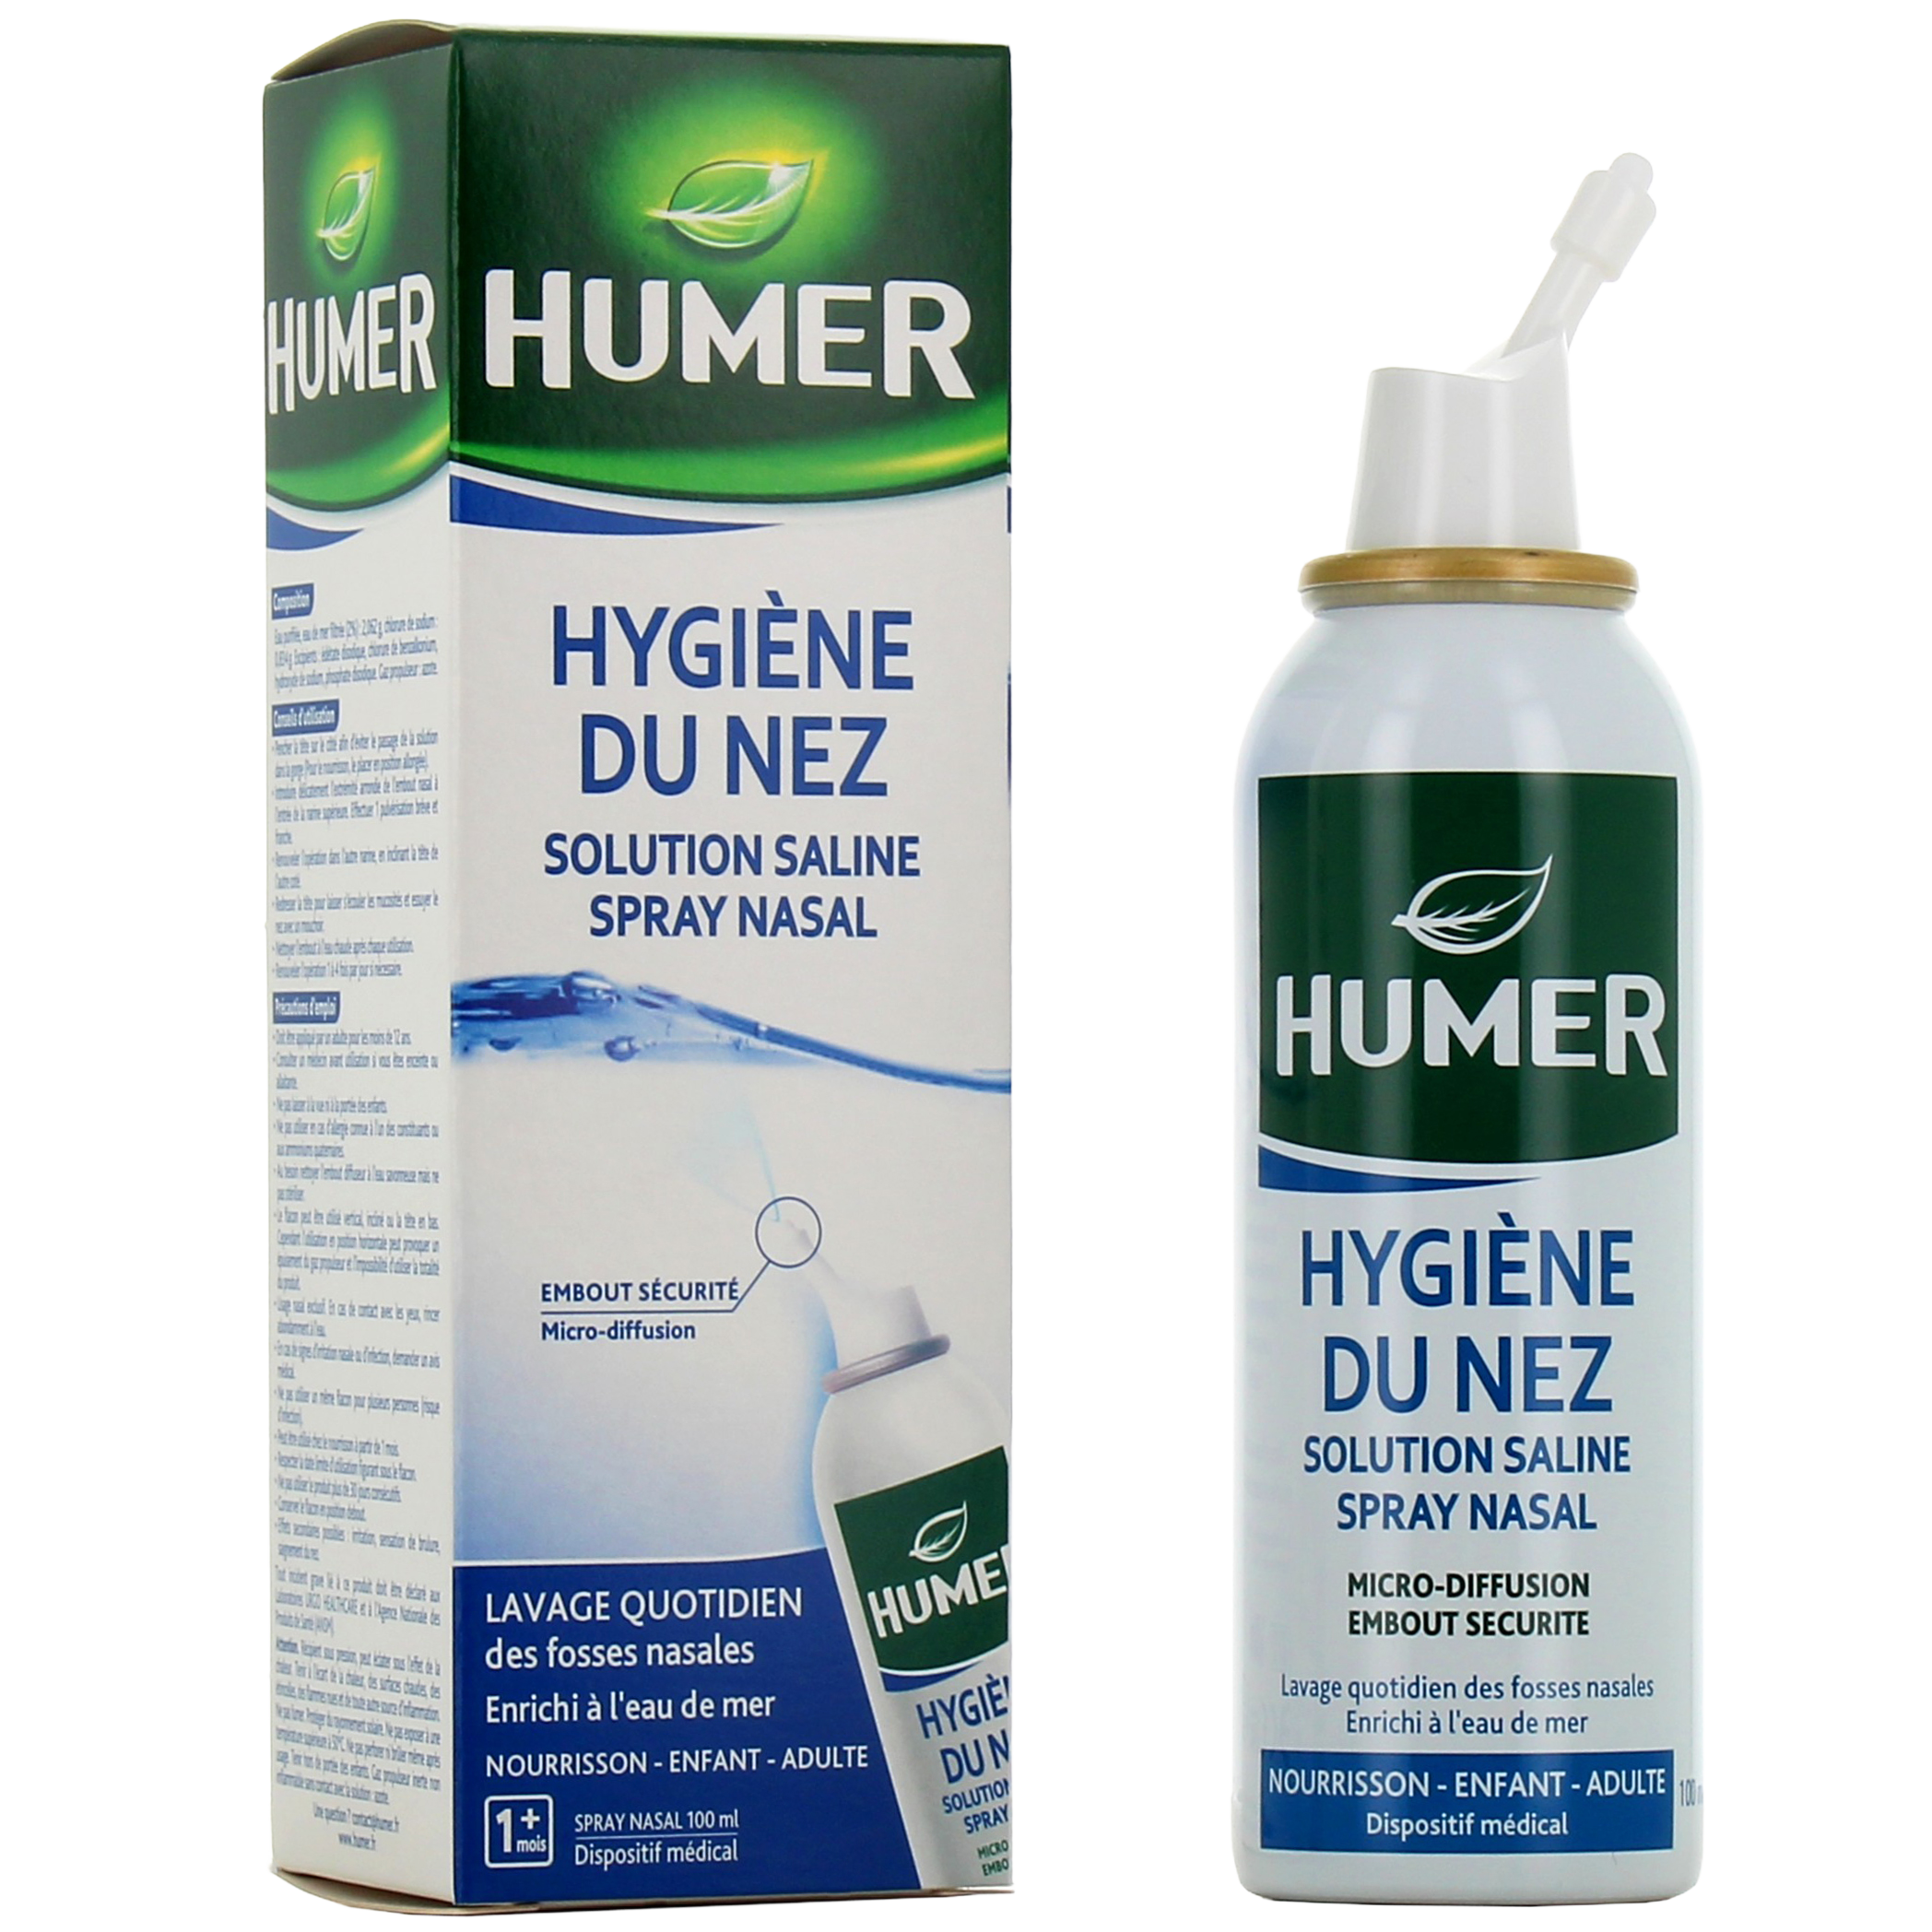 Humer hygiène du nez solution saline spray nasal - Lavage quotidien